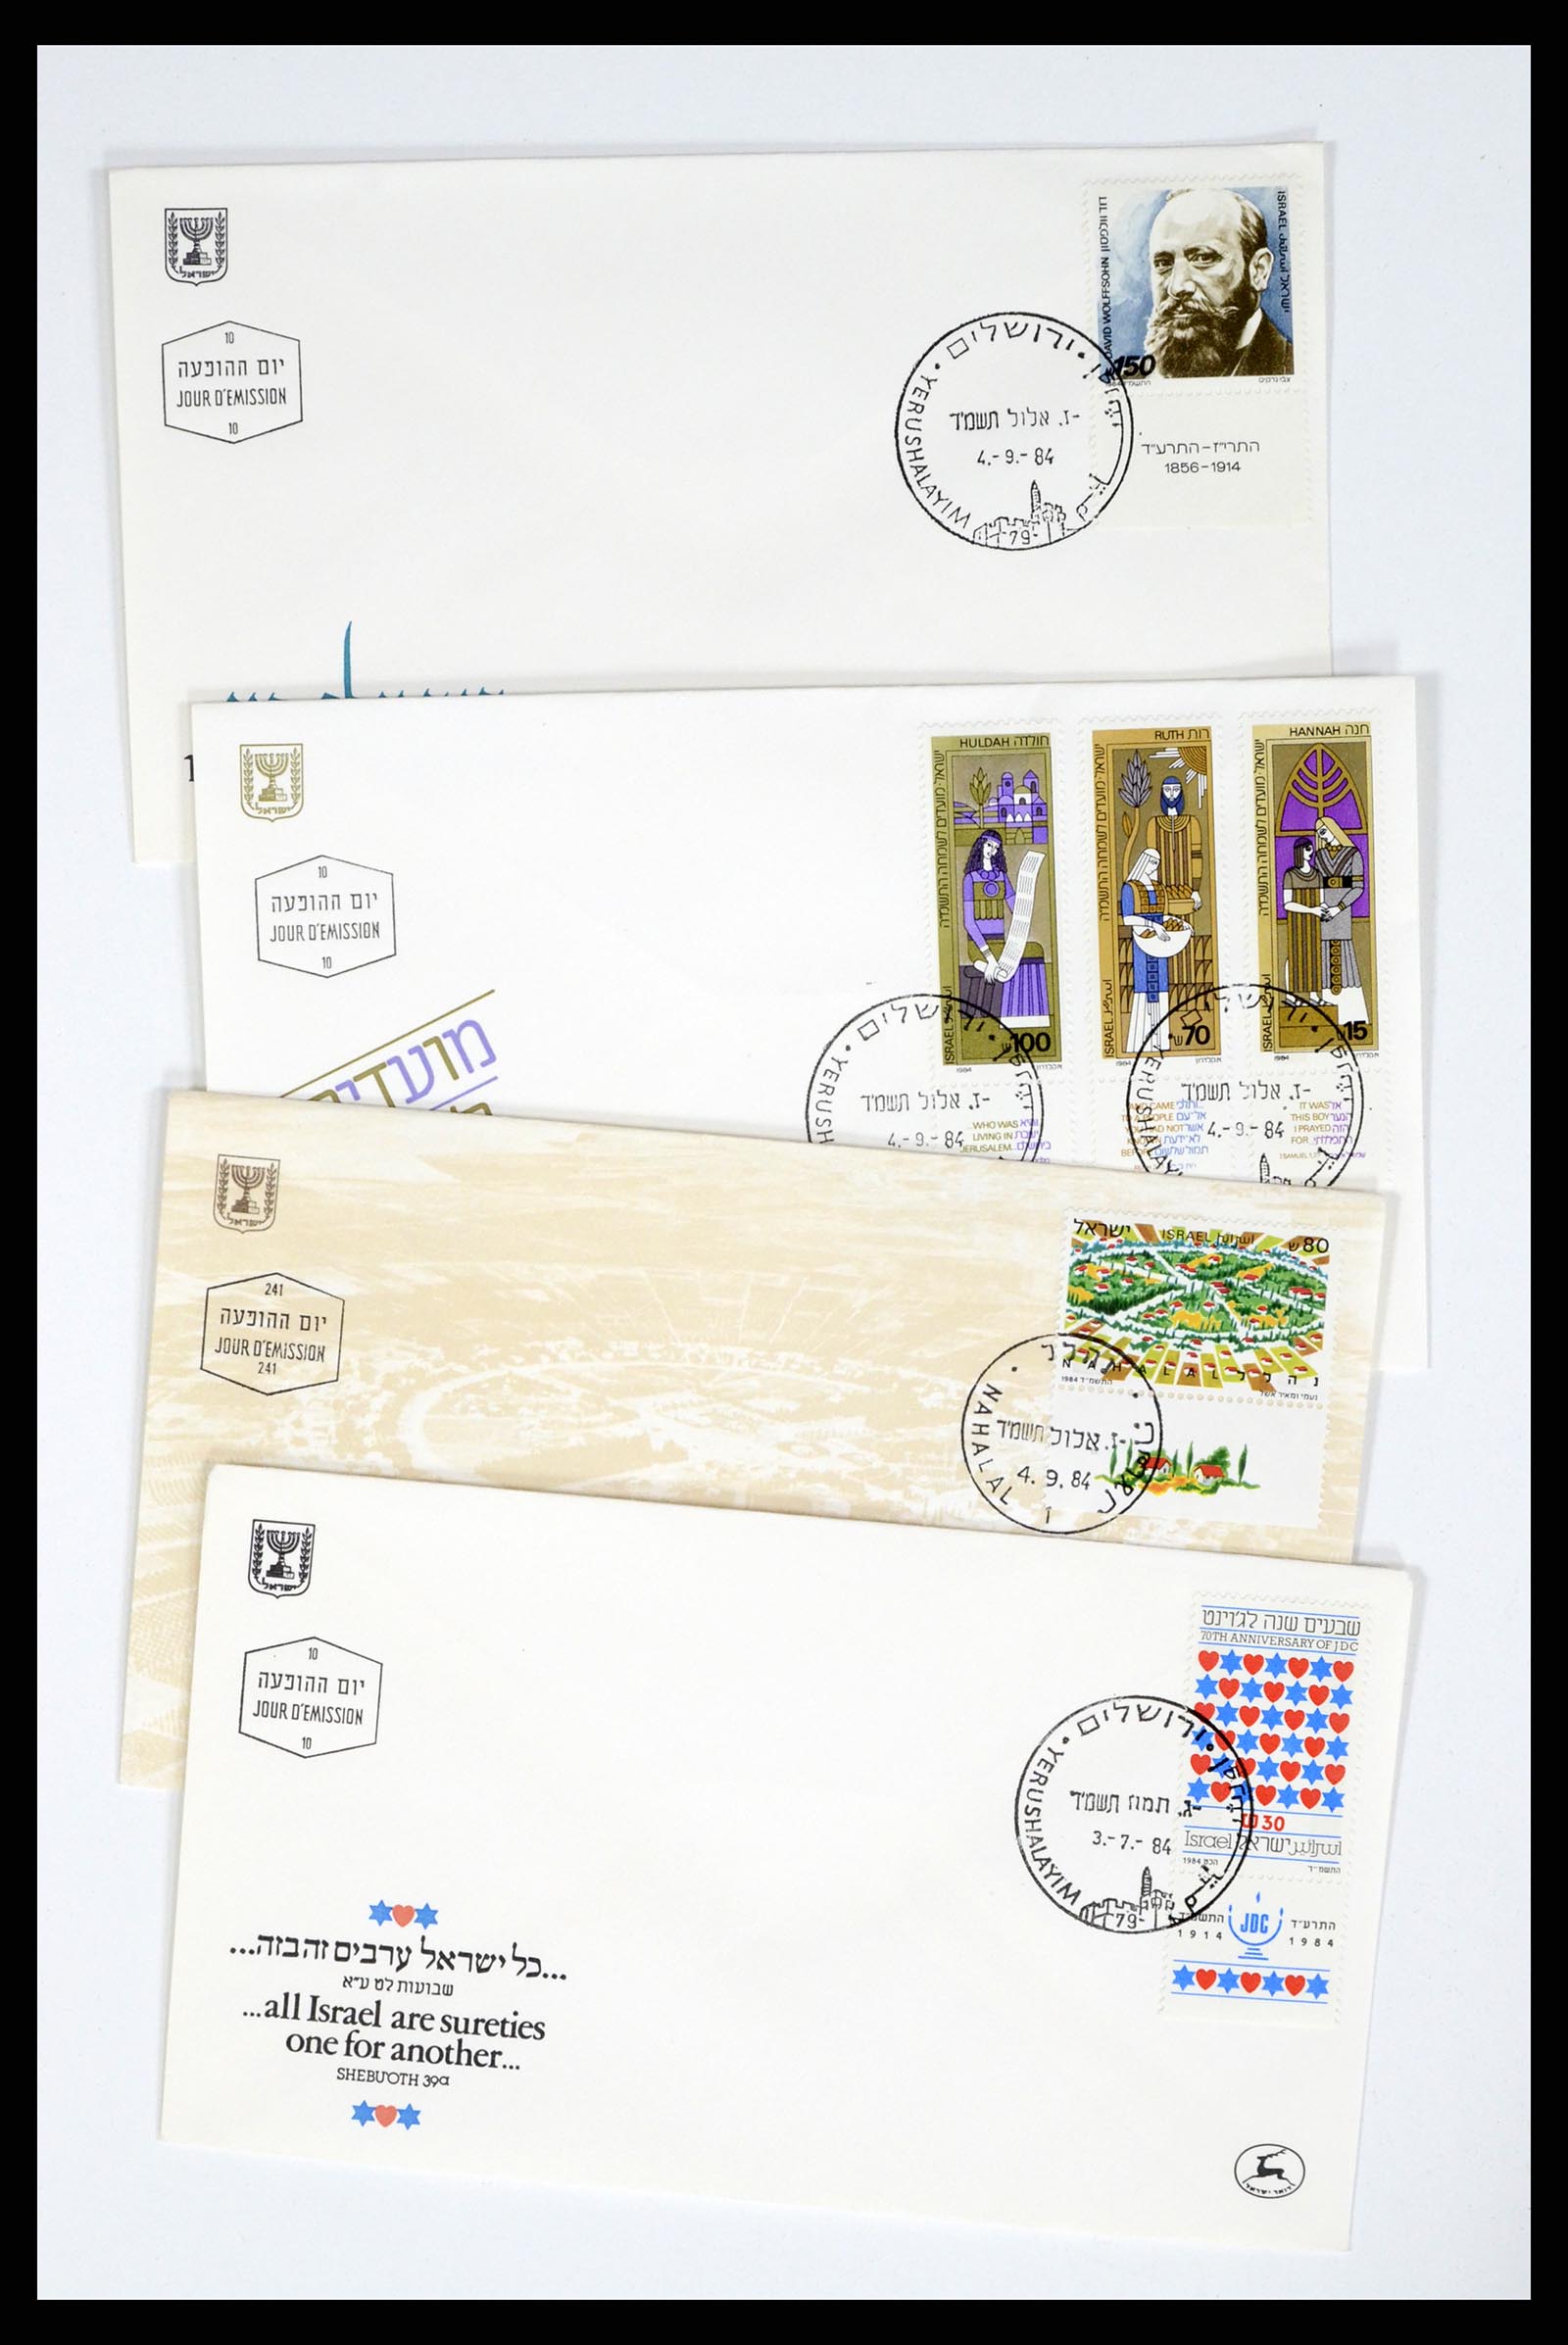 37711 185 - Postzegelverzameling 37711 Israël first day covers 1970-2000.